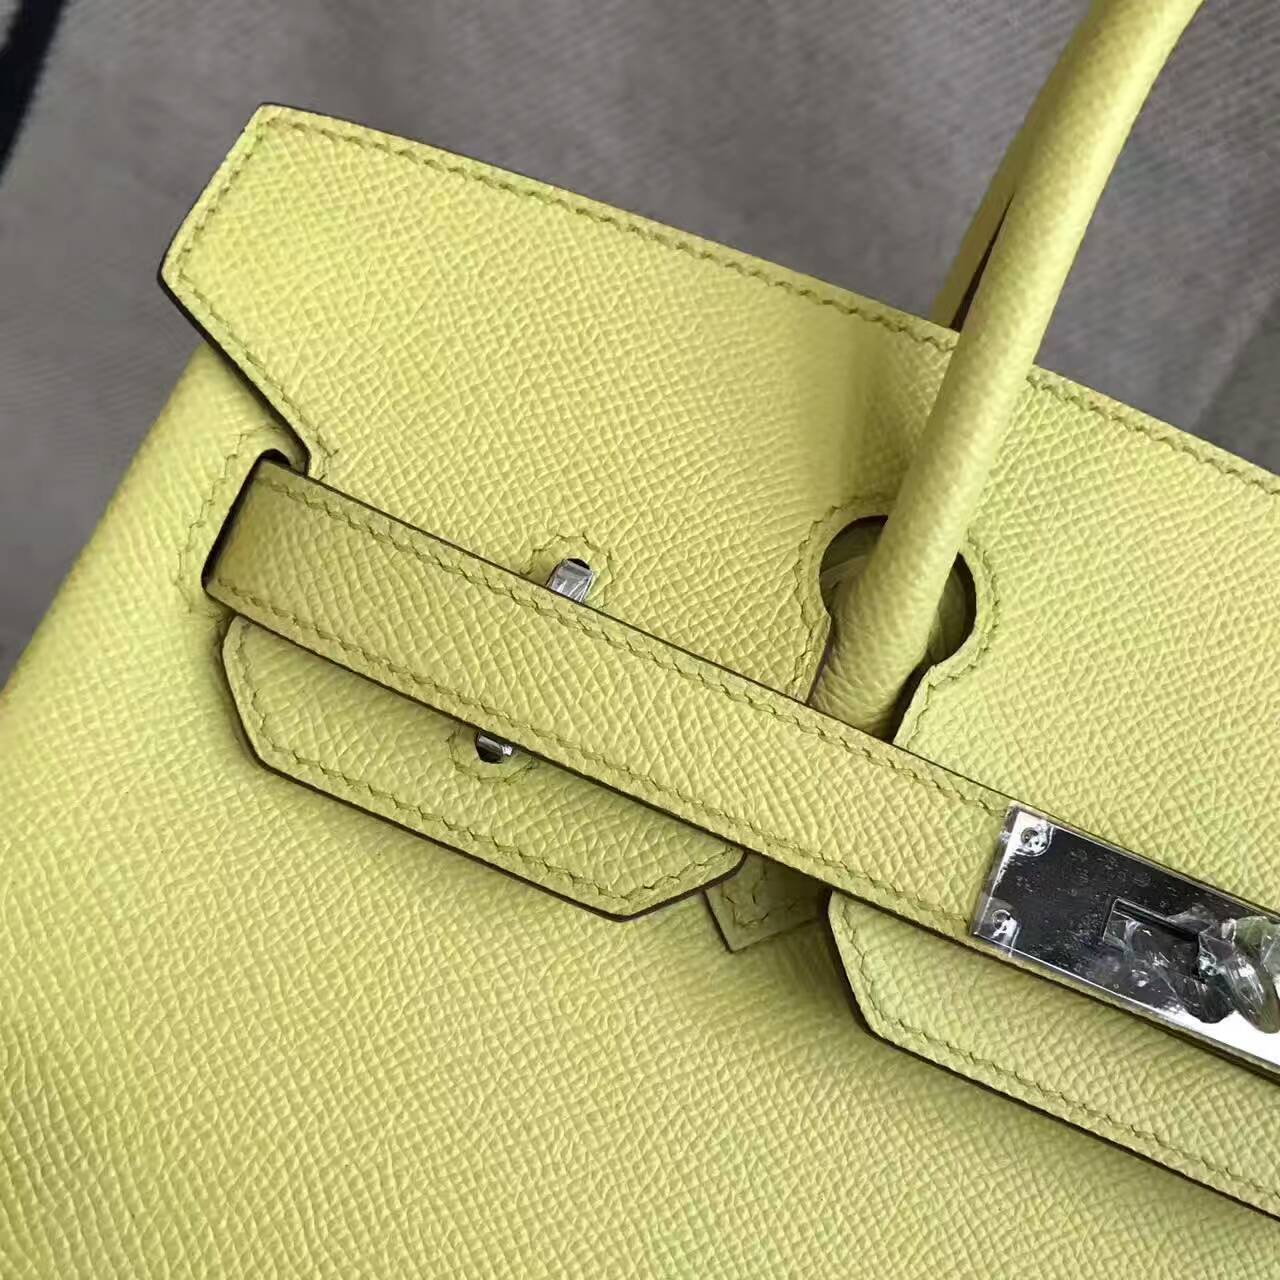 On Sale Hermes Birkin Bag 30cm in 9R Lemon Yellow Epsom Leather